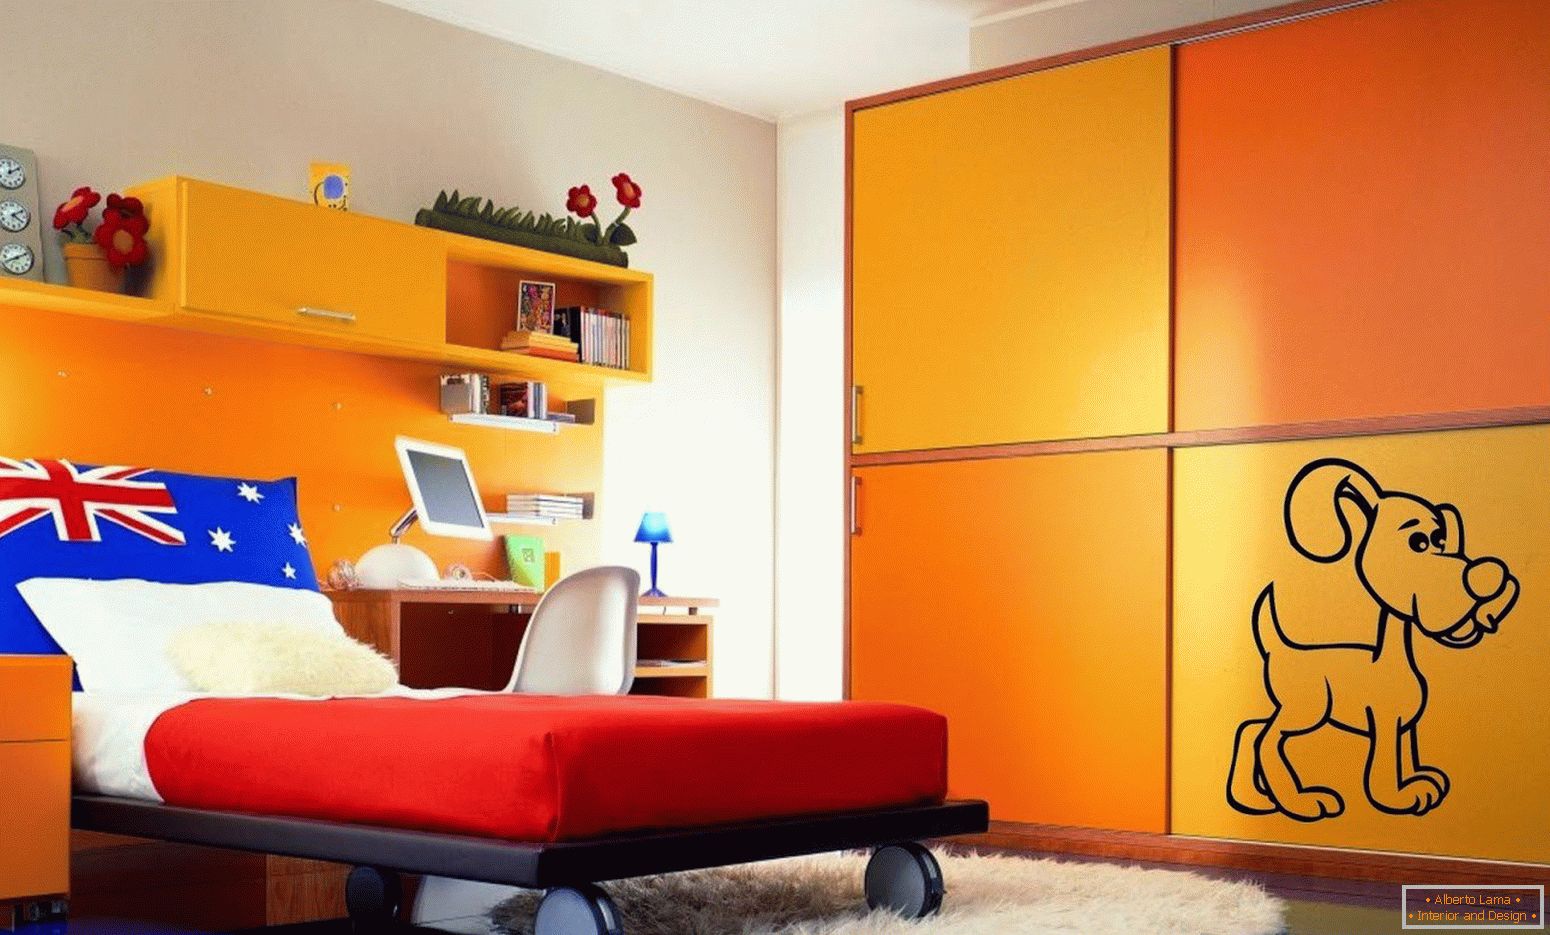 Pohištvo v oranžni barvi